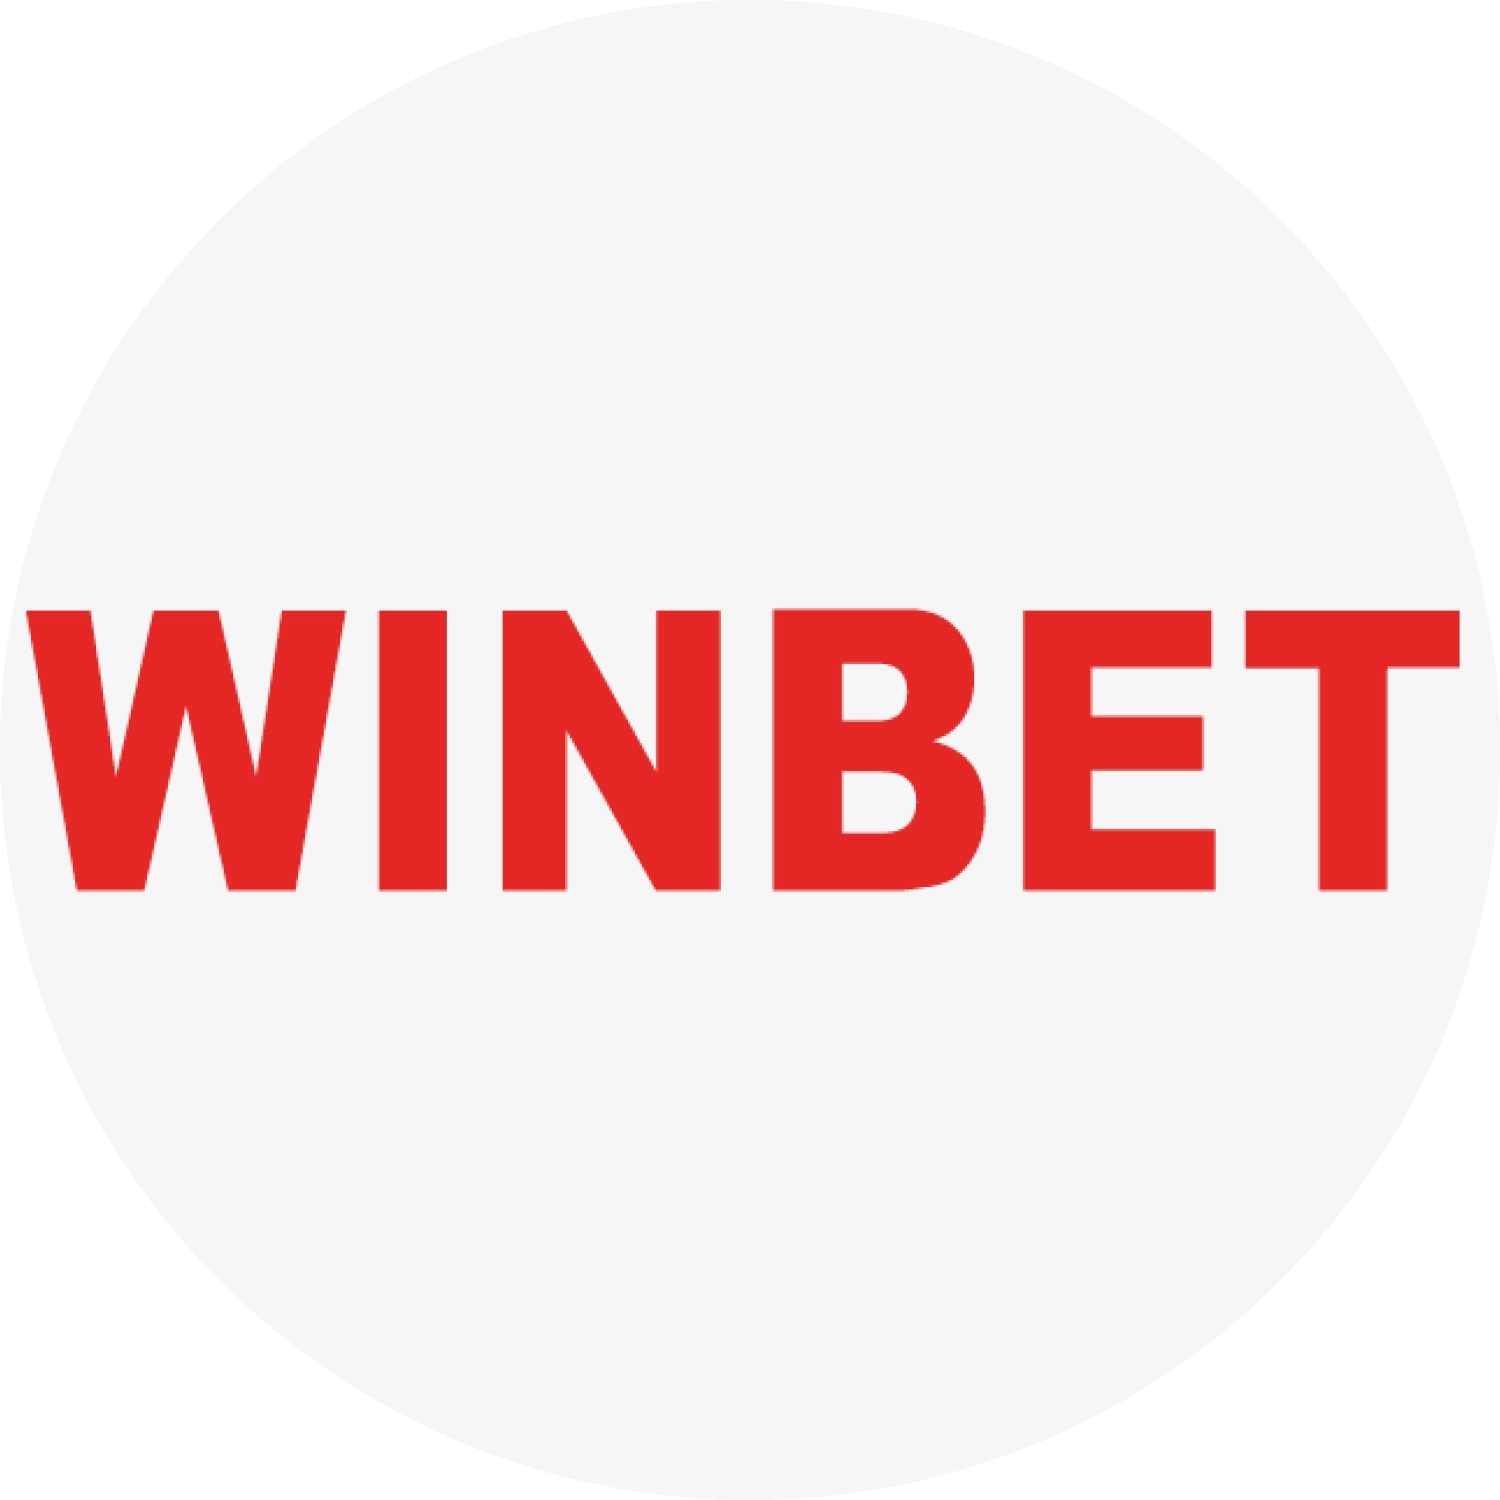 Winbet casino logo rotund 1500x1500 gri